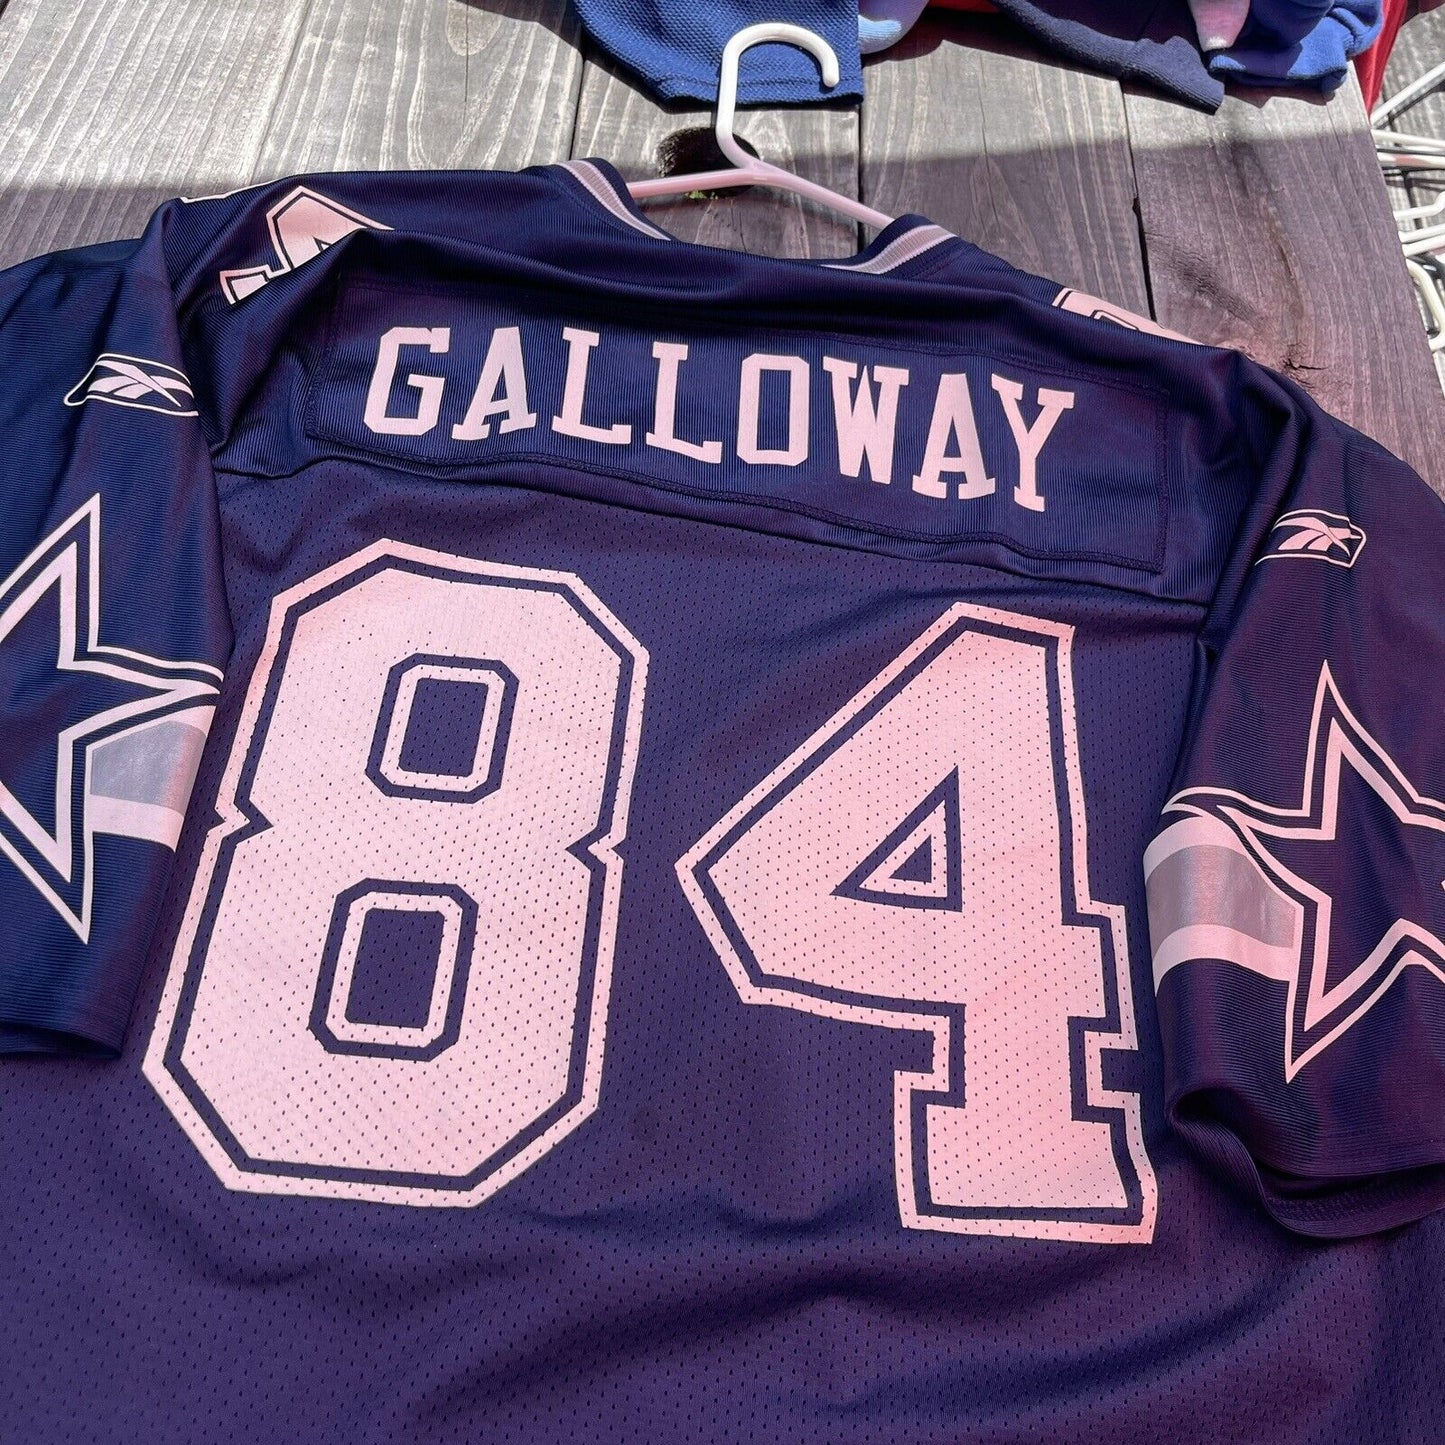 Joey Galloway Reebok Dallas Cowboys Jersey Mens Size XL #84 Throwback Vintage